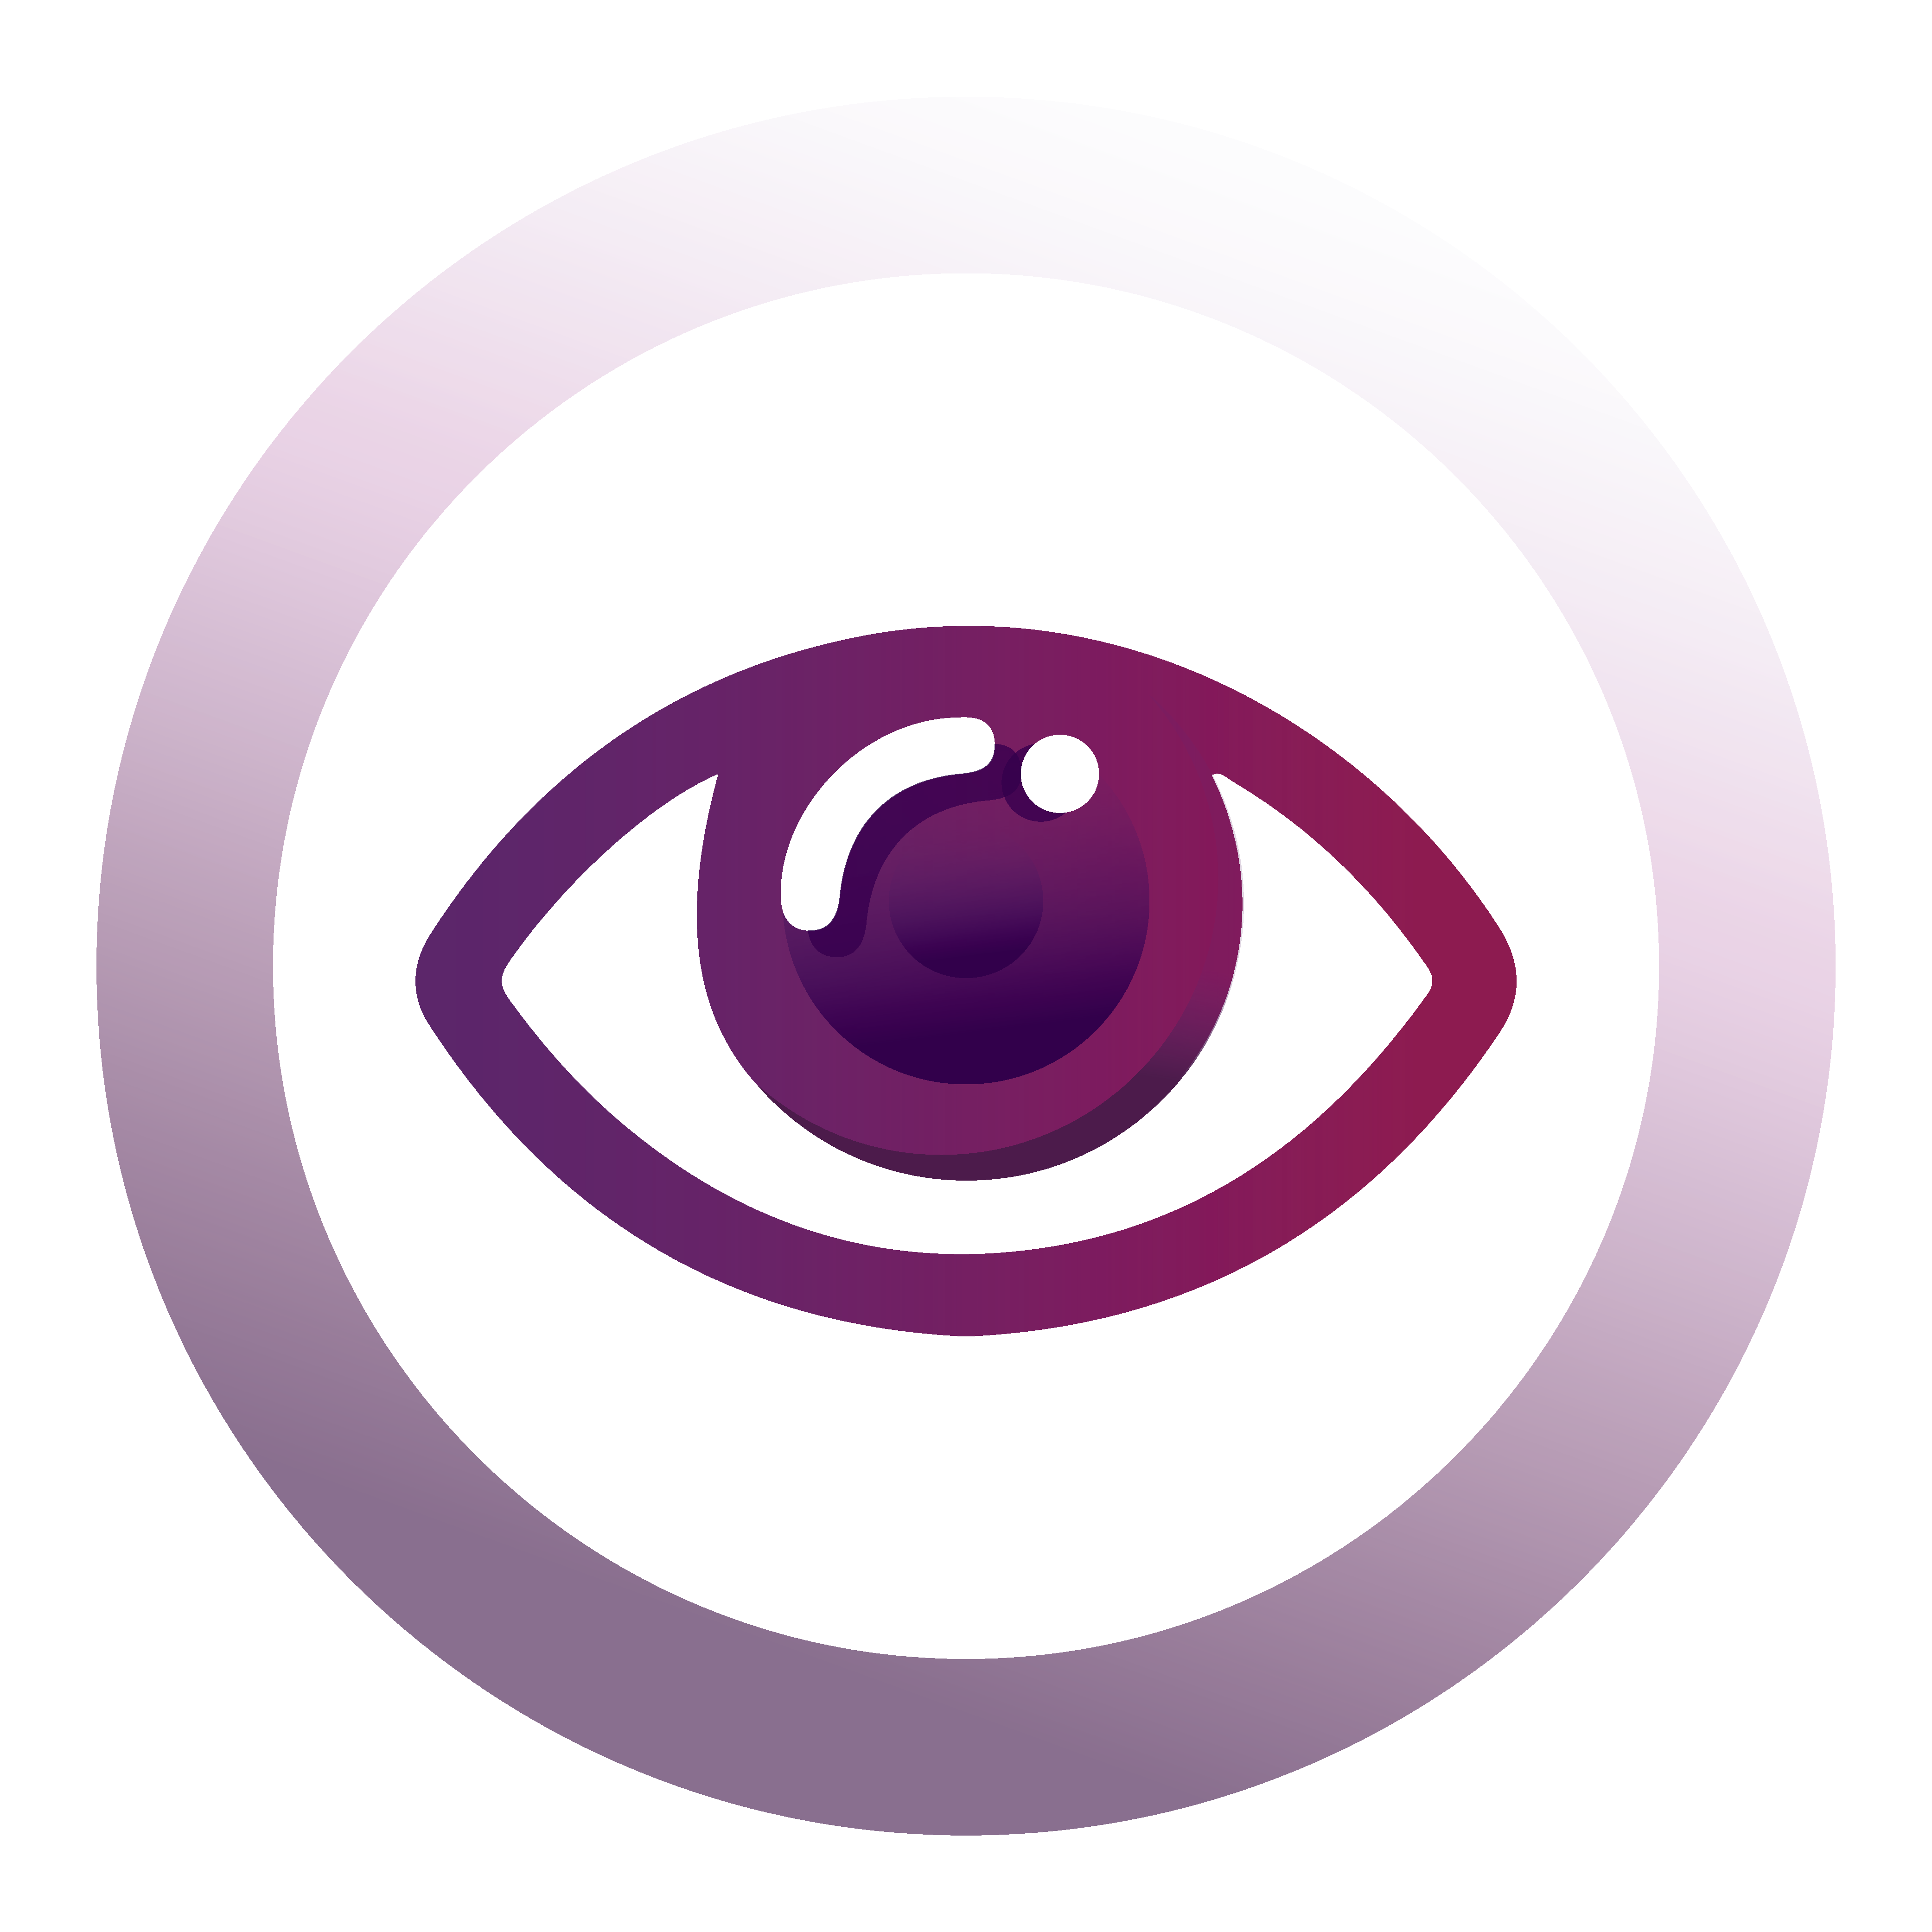 An icon of an eye inside a circle